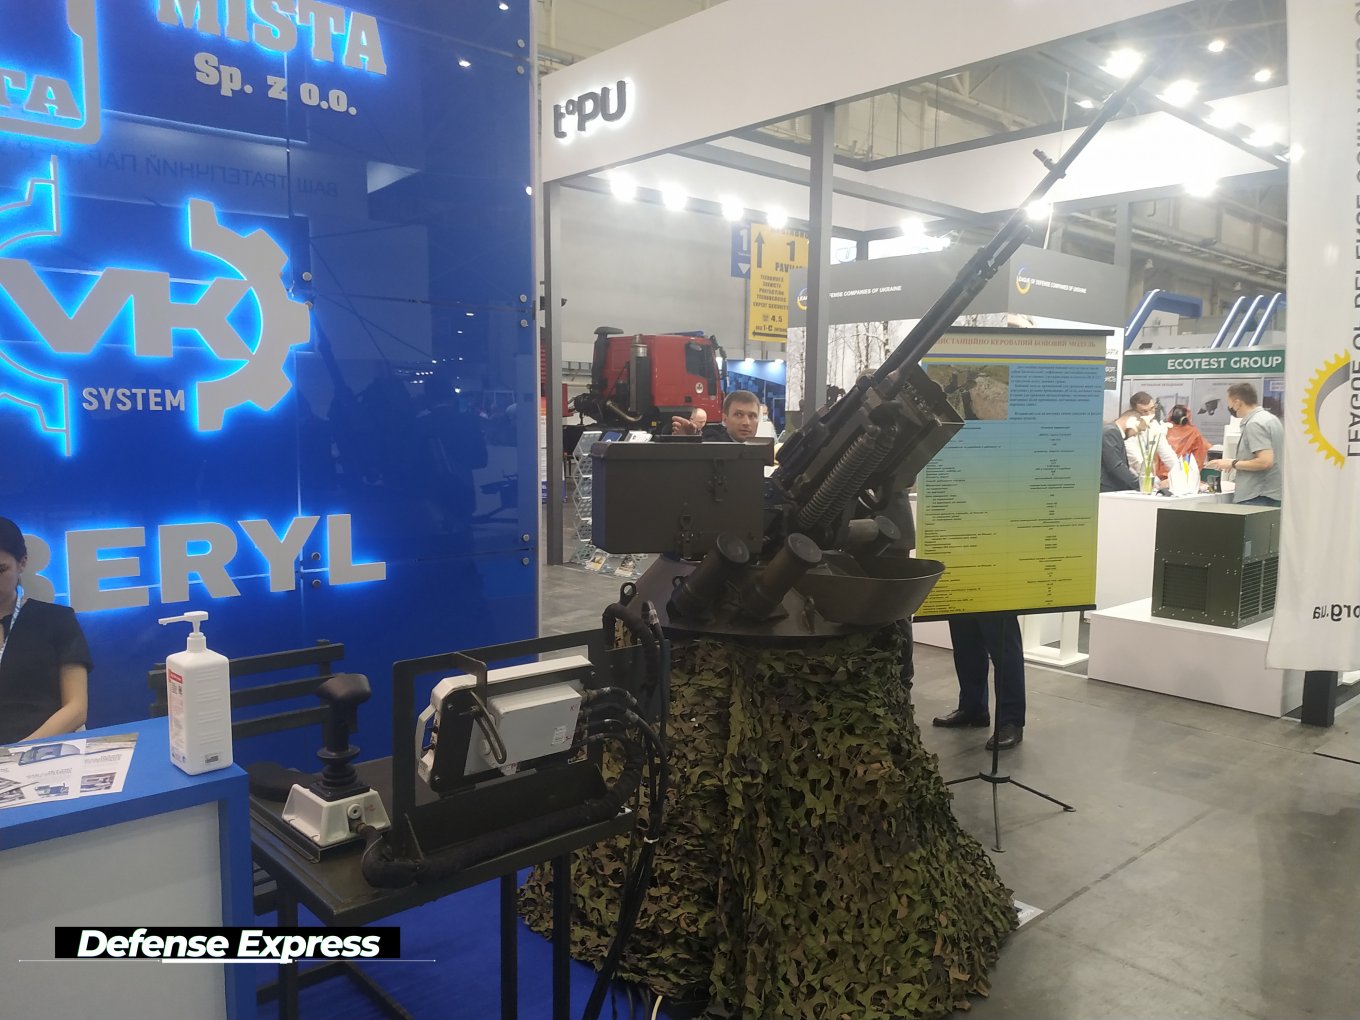 дистанційно керована кулеметна установка оснащена кулеметом НСВ - 12,7, MISTA SP. Z O.O., Зброя та Безпека - 2021,Defense Express